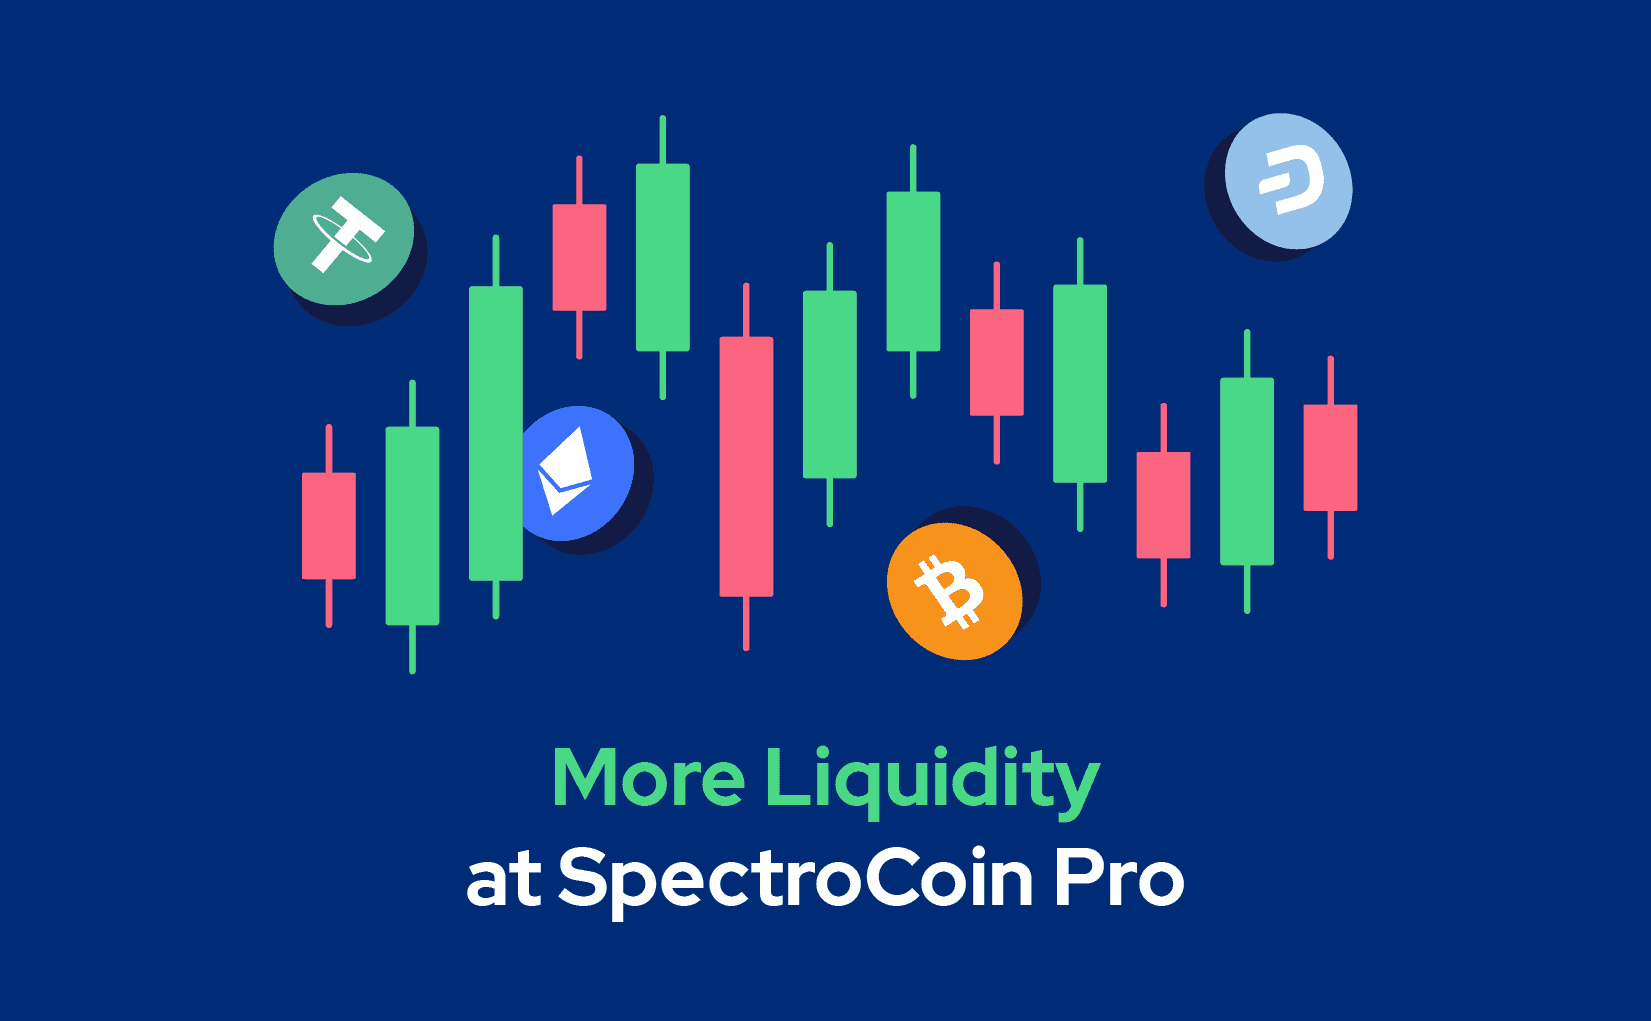 Daugiau likvidumo SpectroCoin Pro platformoje